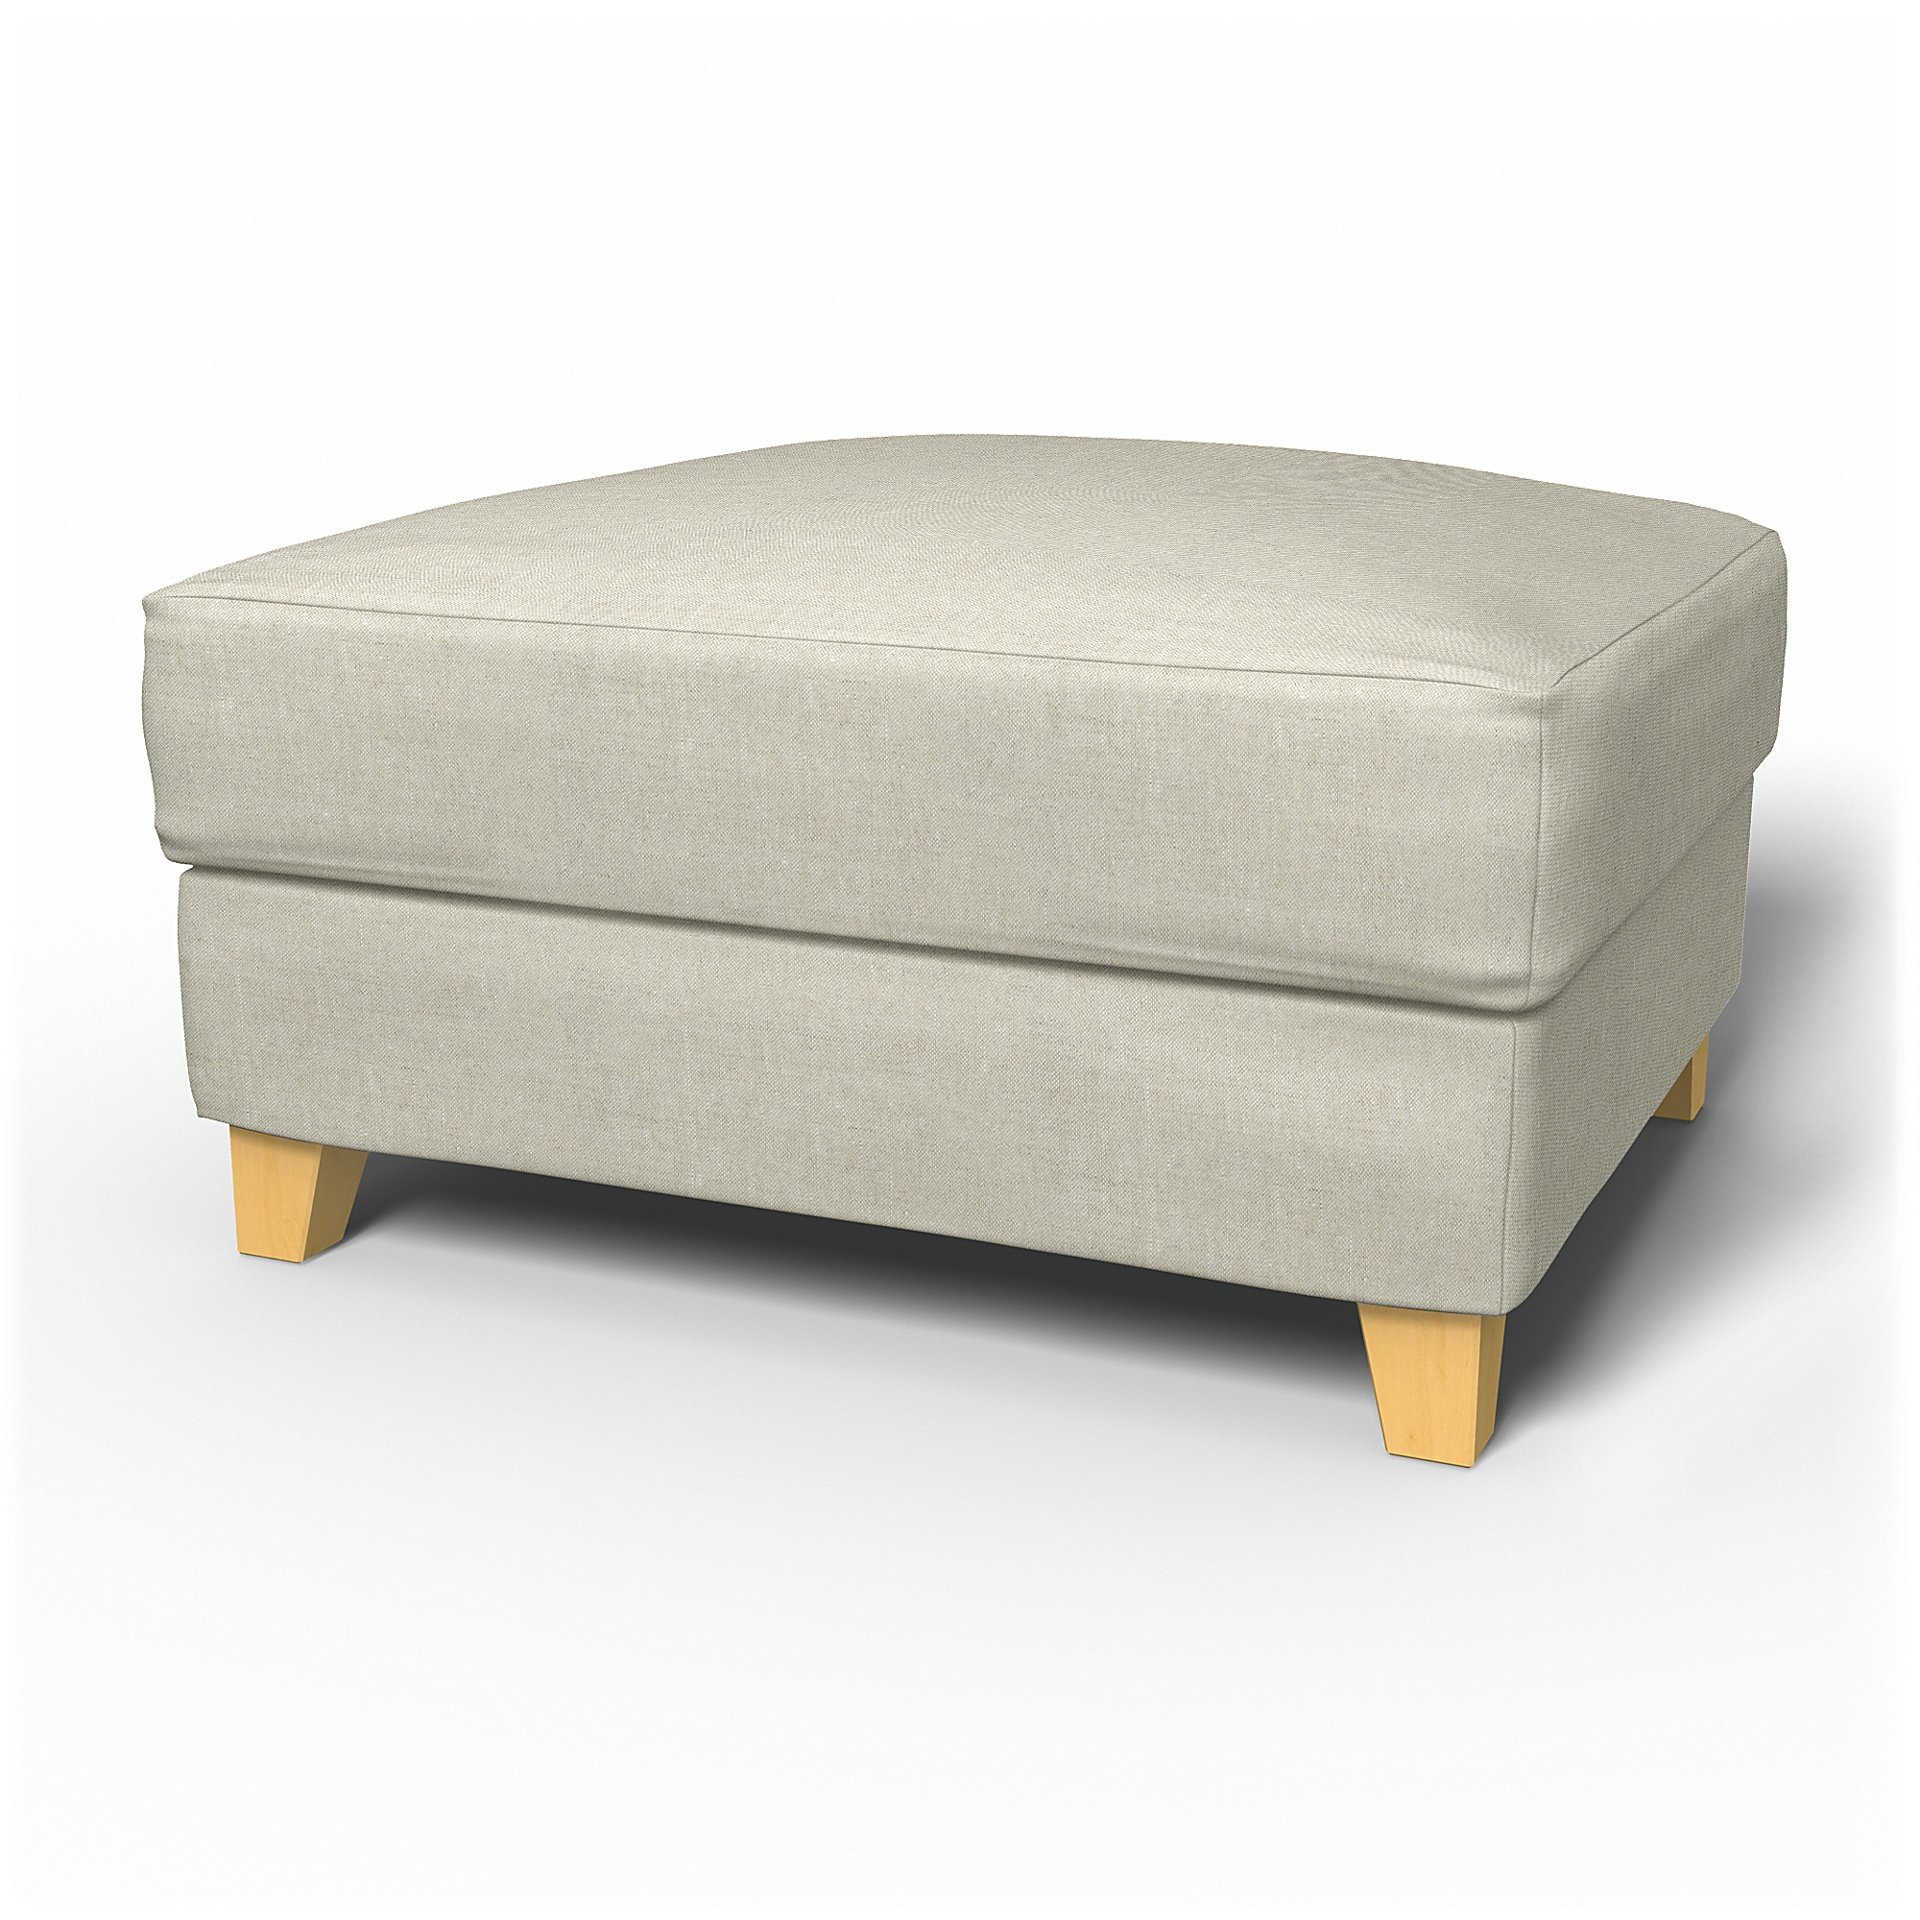 IKEA - Backa Footstool Cover, Natural, Linen - Bemz